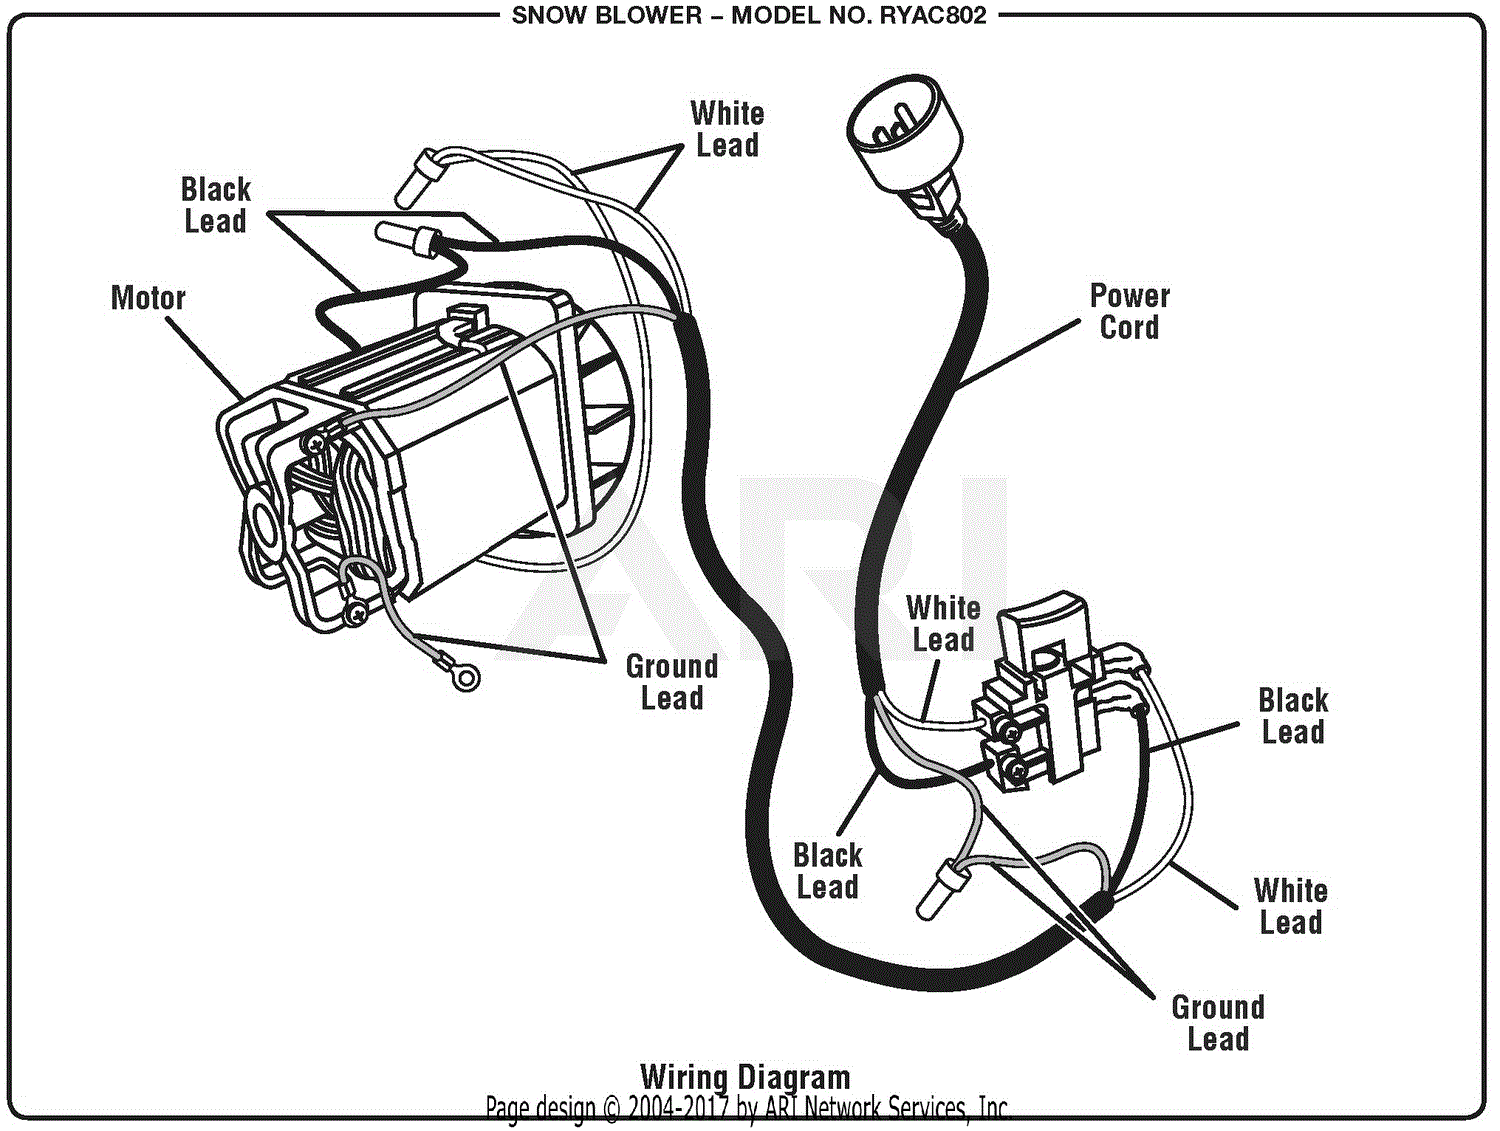 Homelite Ryac802 Snow Blower Parts Diagram For Wiring Diagram